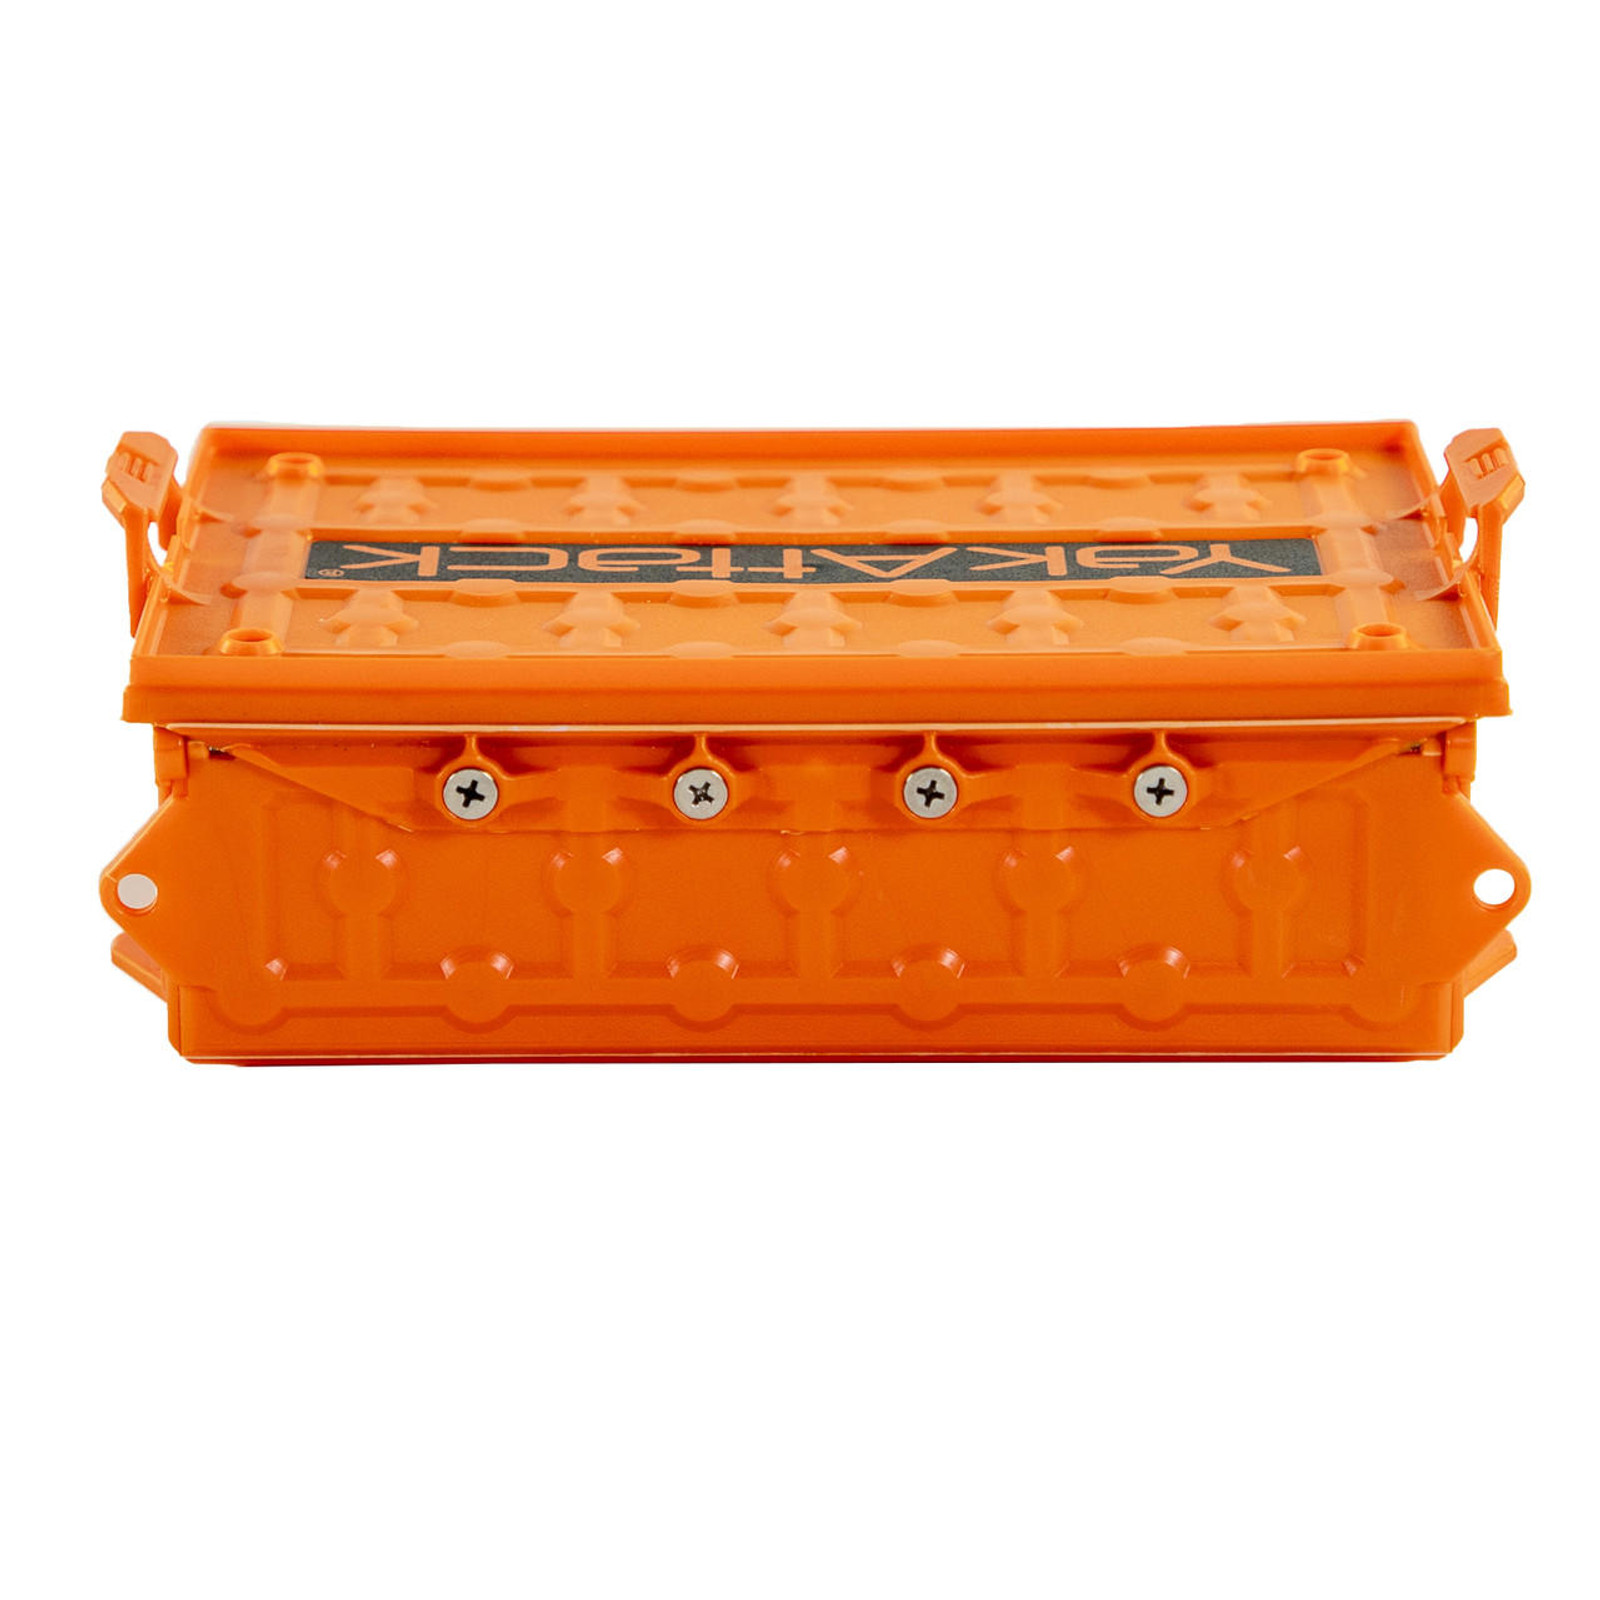  TracPak Stackable Storage Box, Spare Box, Orange 